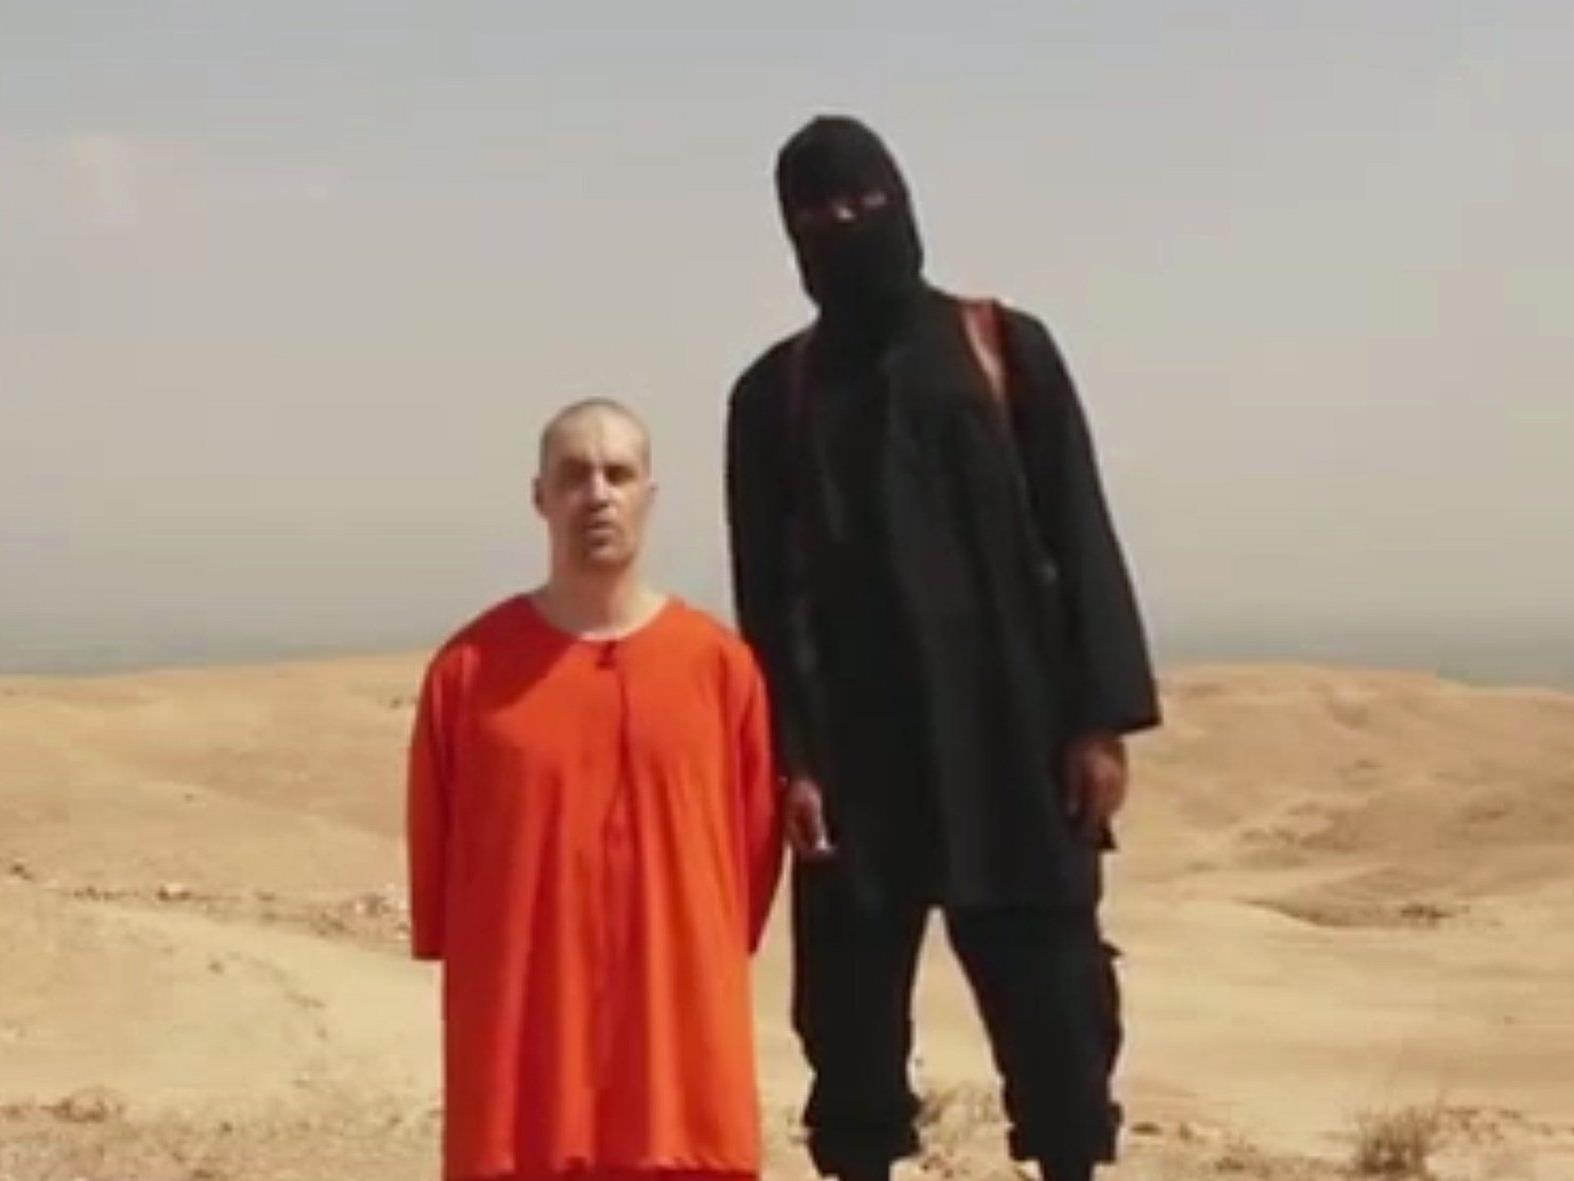 Eine Szene aus dem Video, kurz bevor James Foley enthauptet wird.